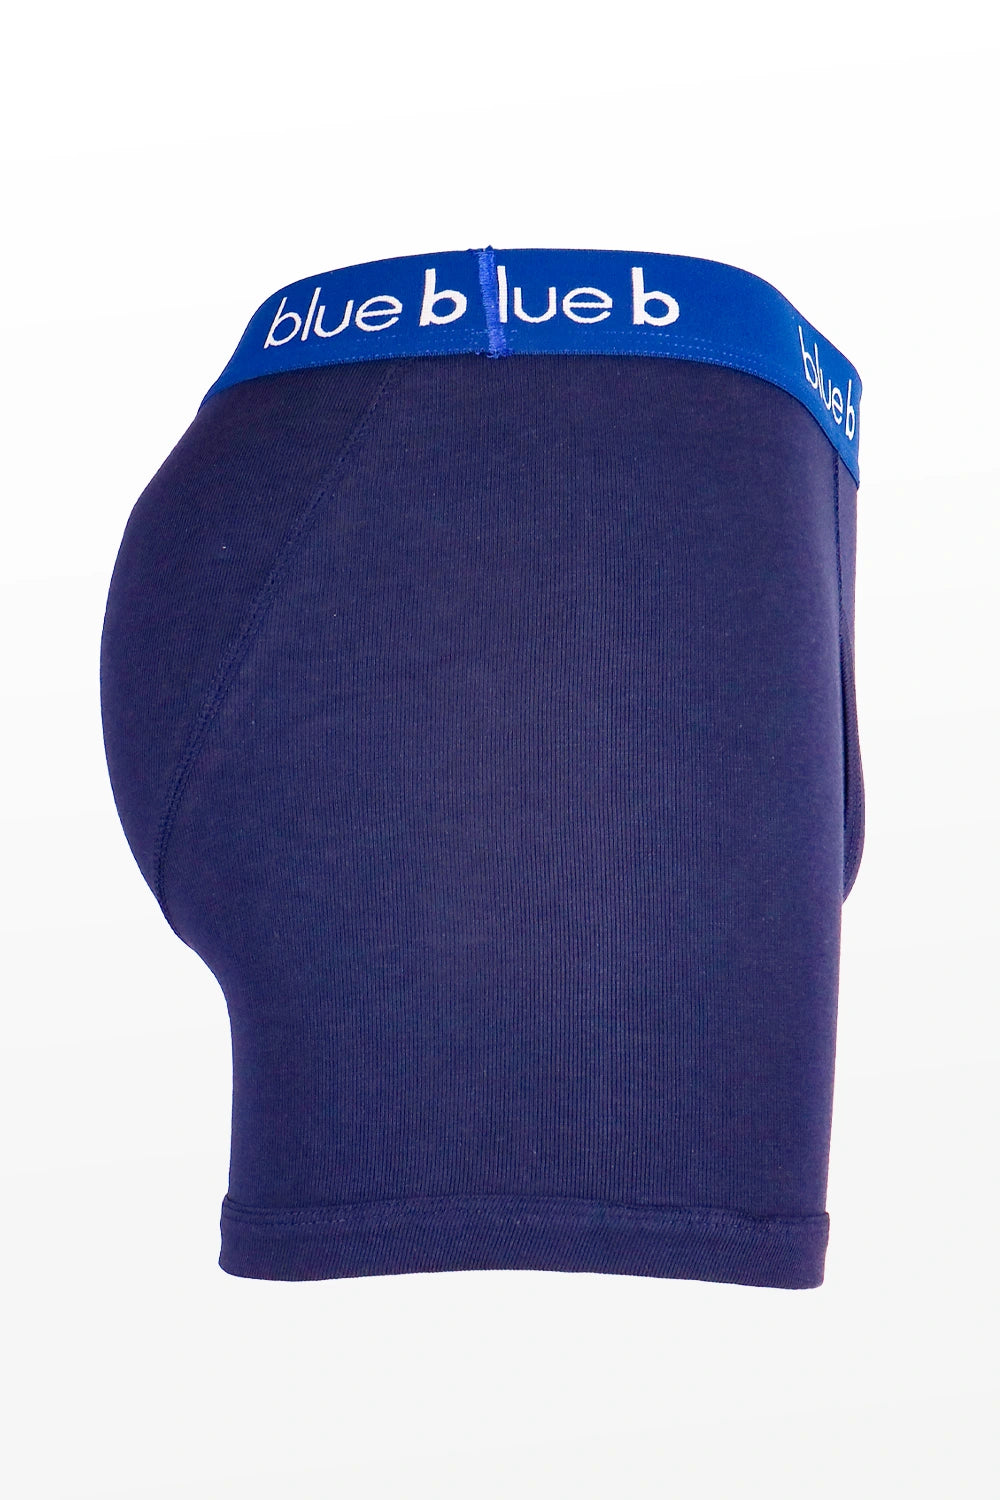 Blue B Apparel Men's Boxer Underwear Blue